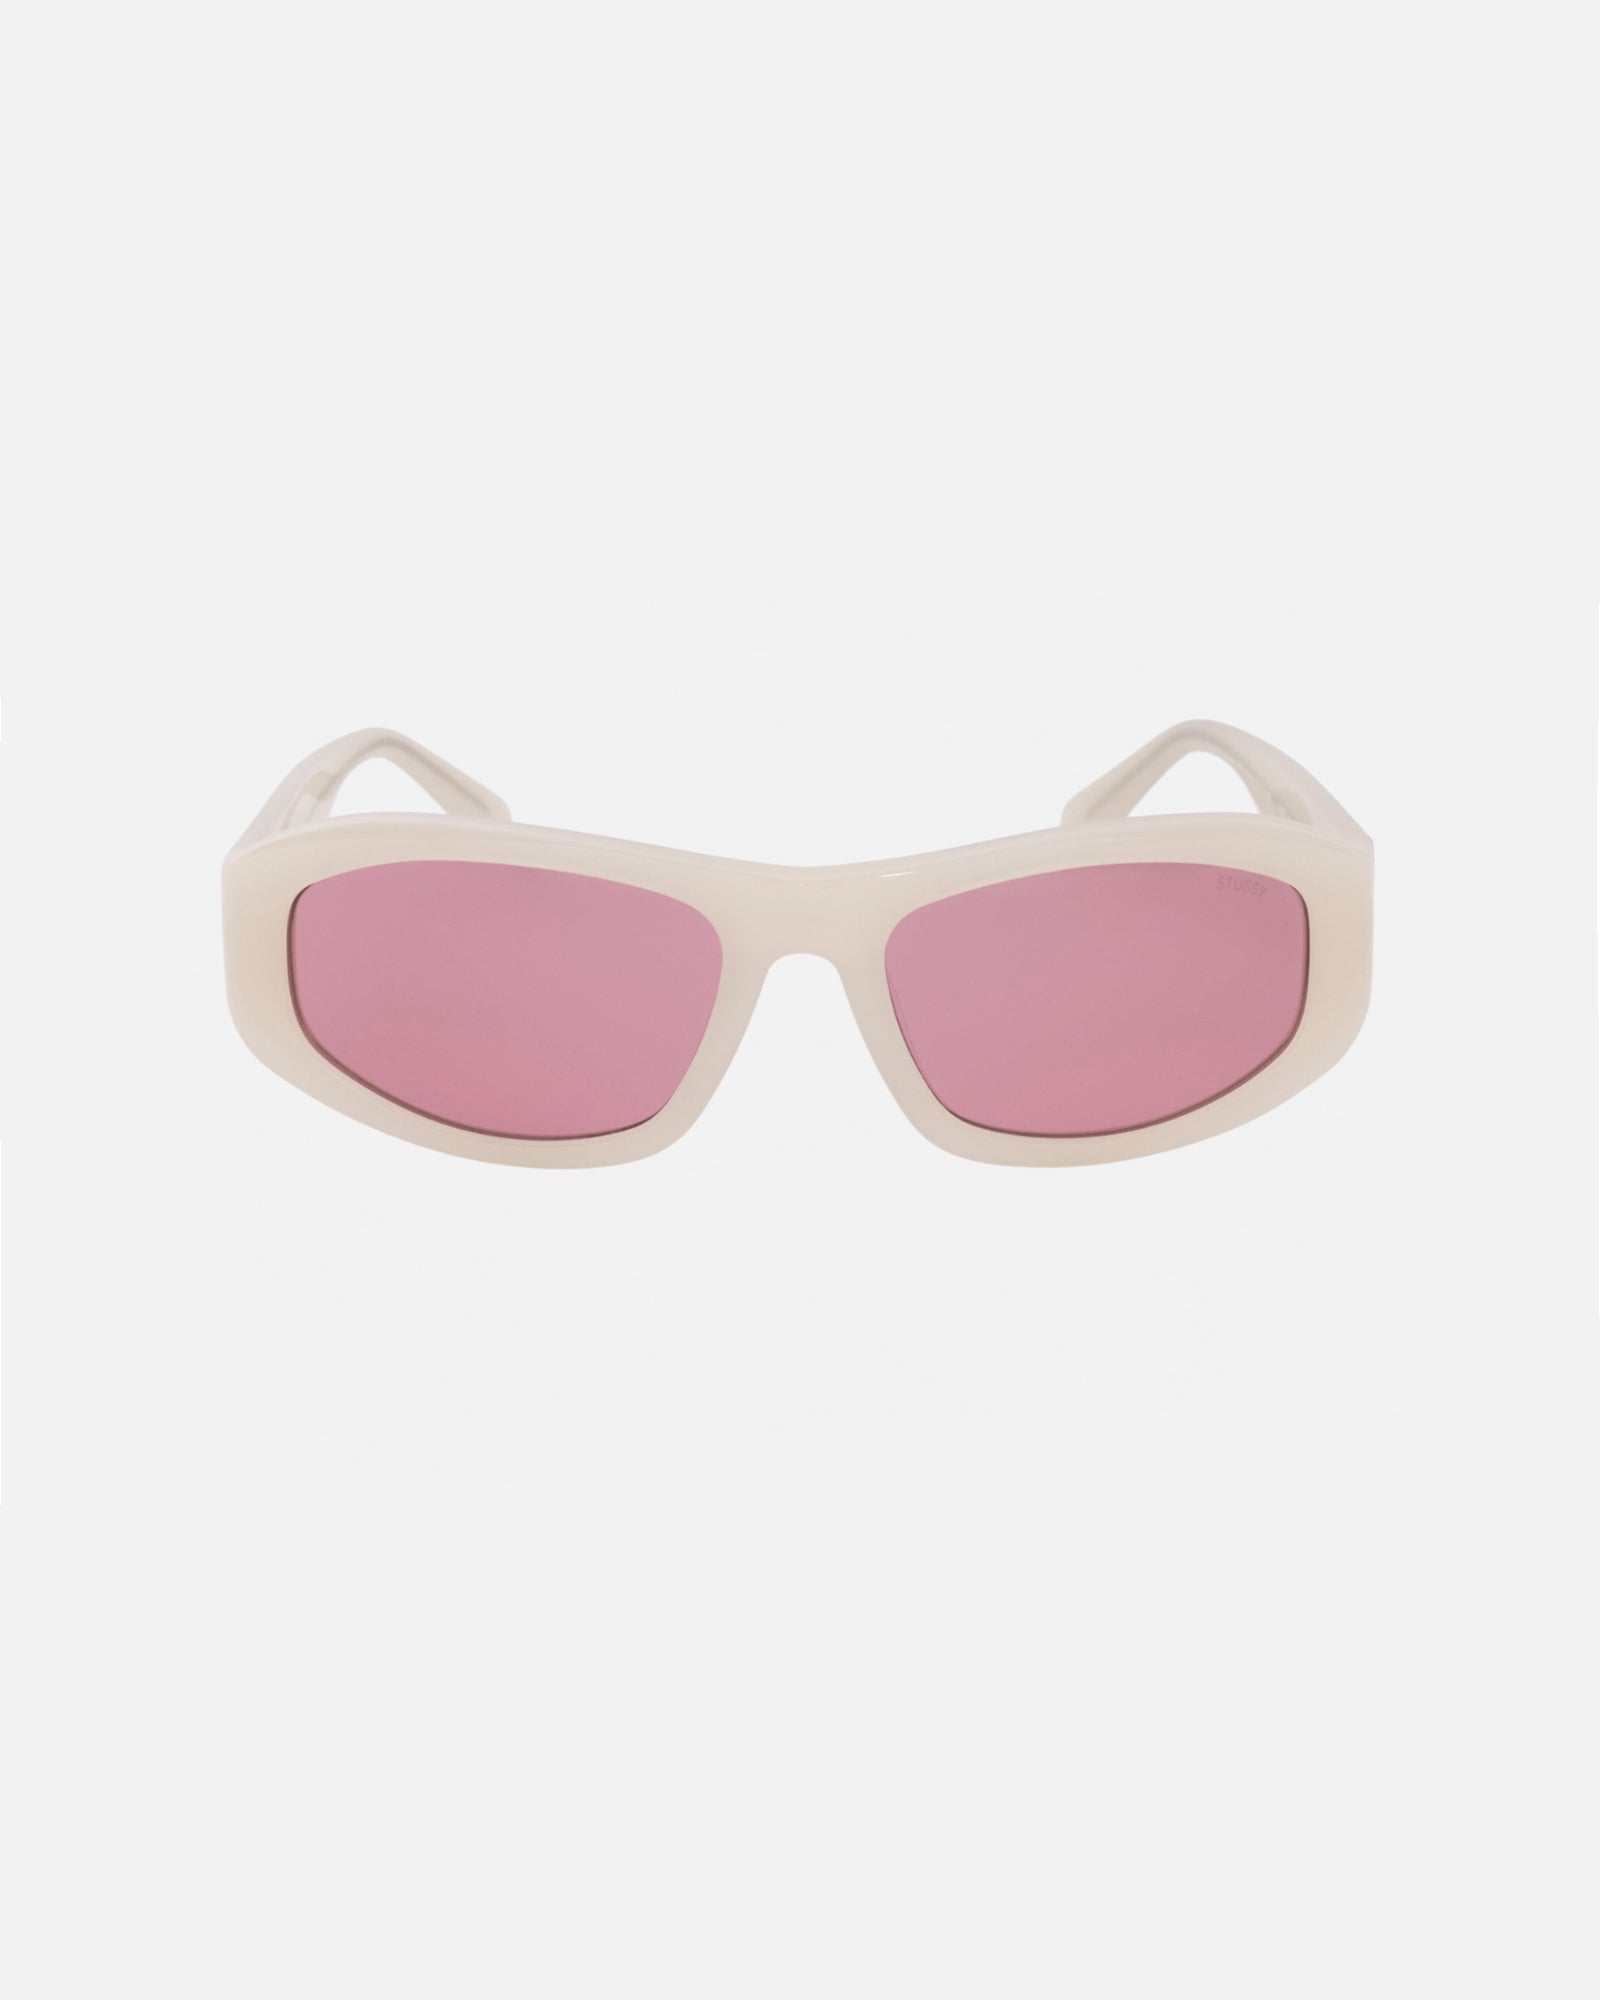 Stüssy Landon Sunglasses Cream / Pink Lens Accessories